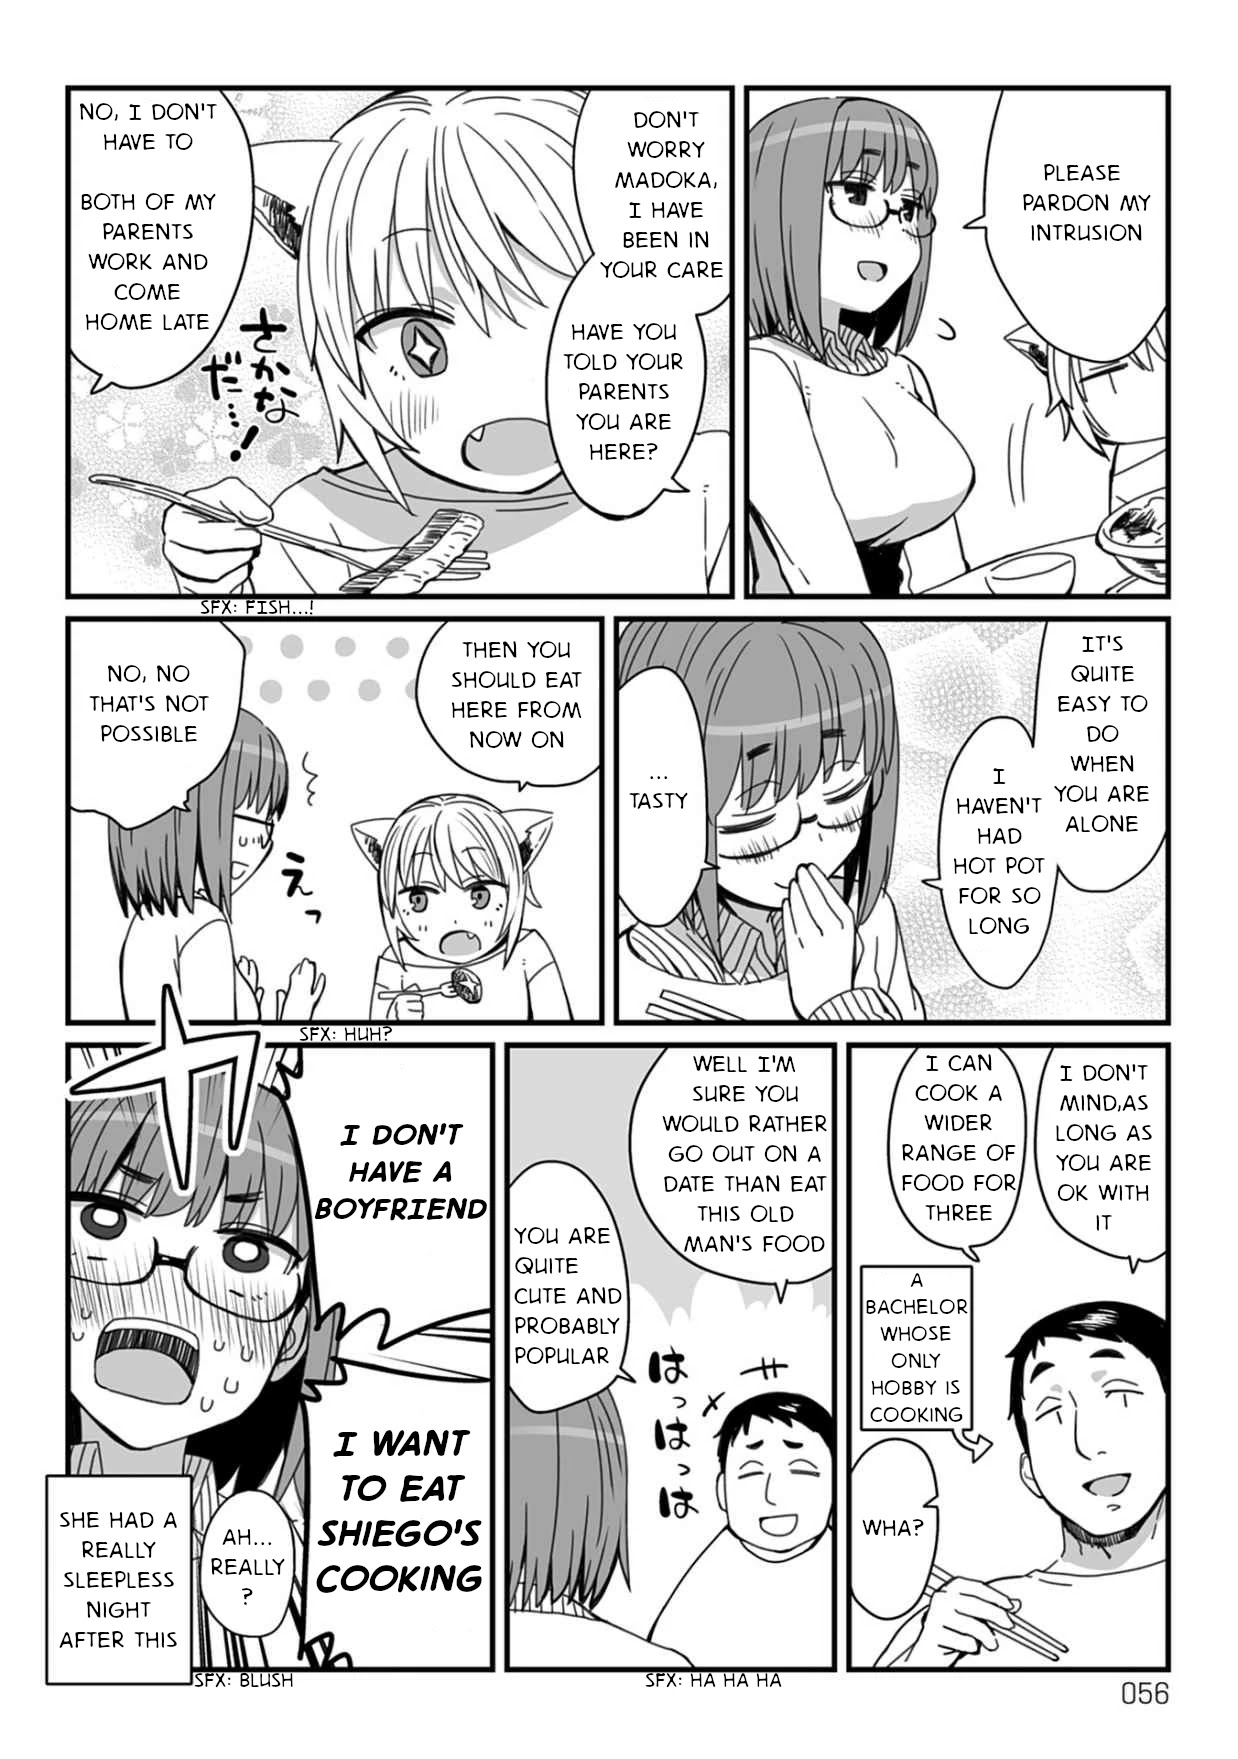 Viruka-San Vs - Page 2